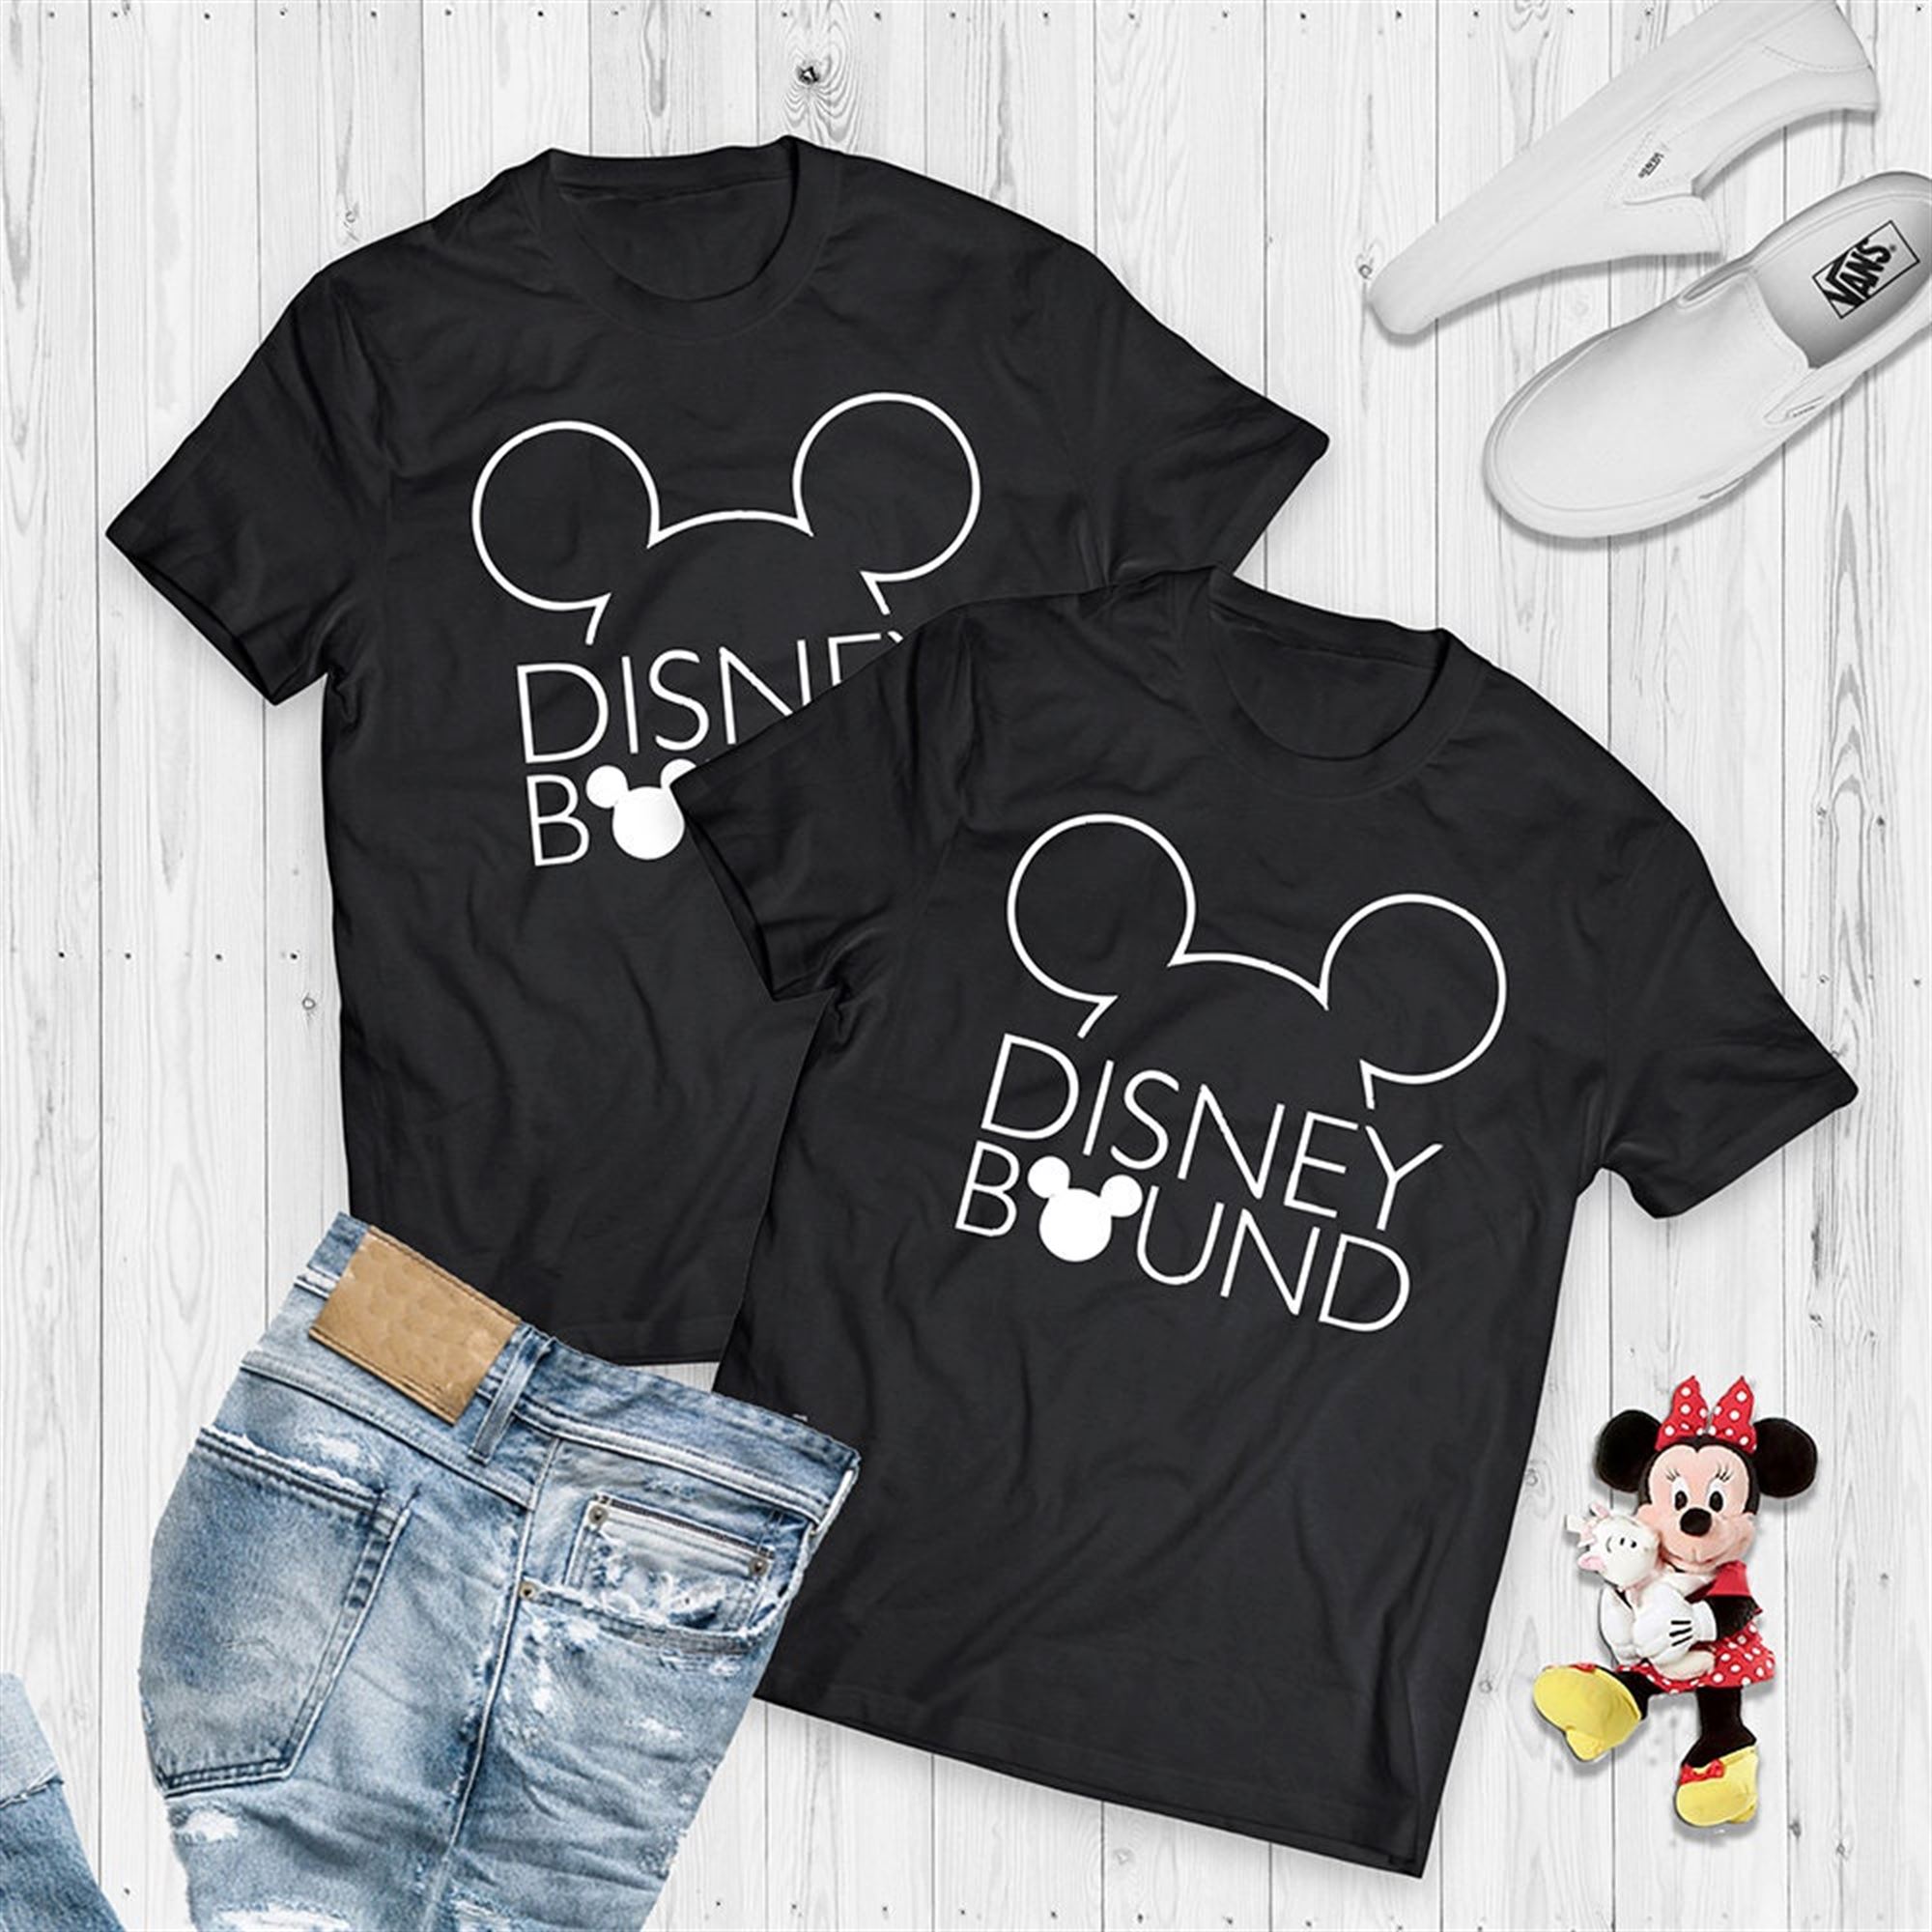 Promotions Disneyland Shirts Disney Matching Disney Bound Shirt Disney Shirt Disney Tee Disney Birthday Disney Vacation 